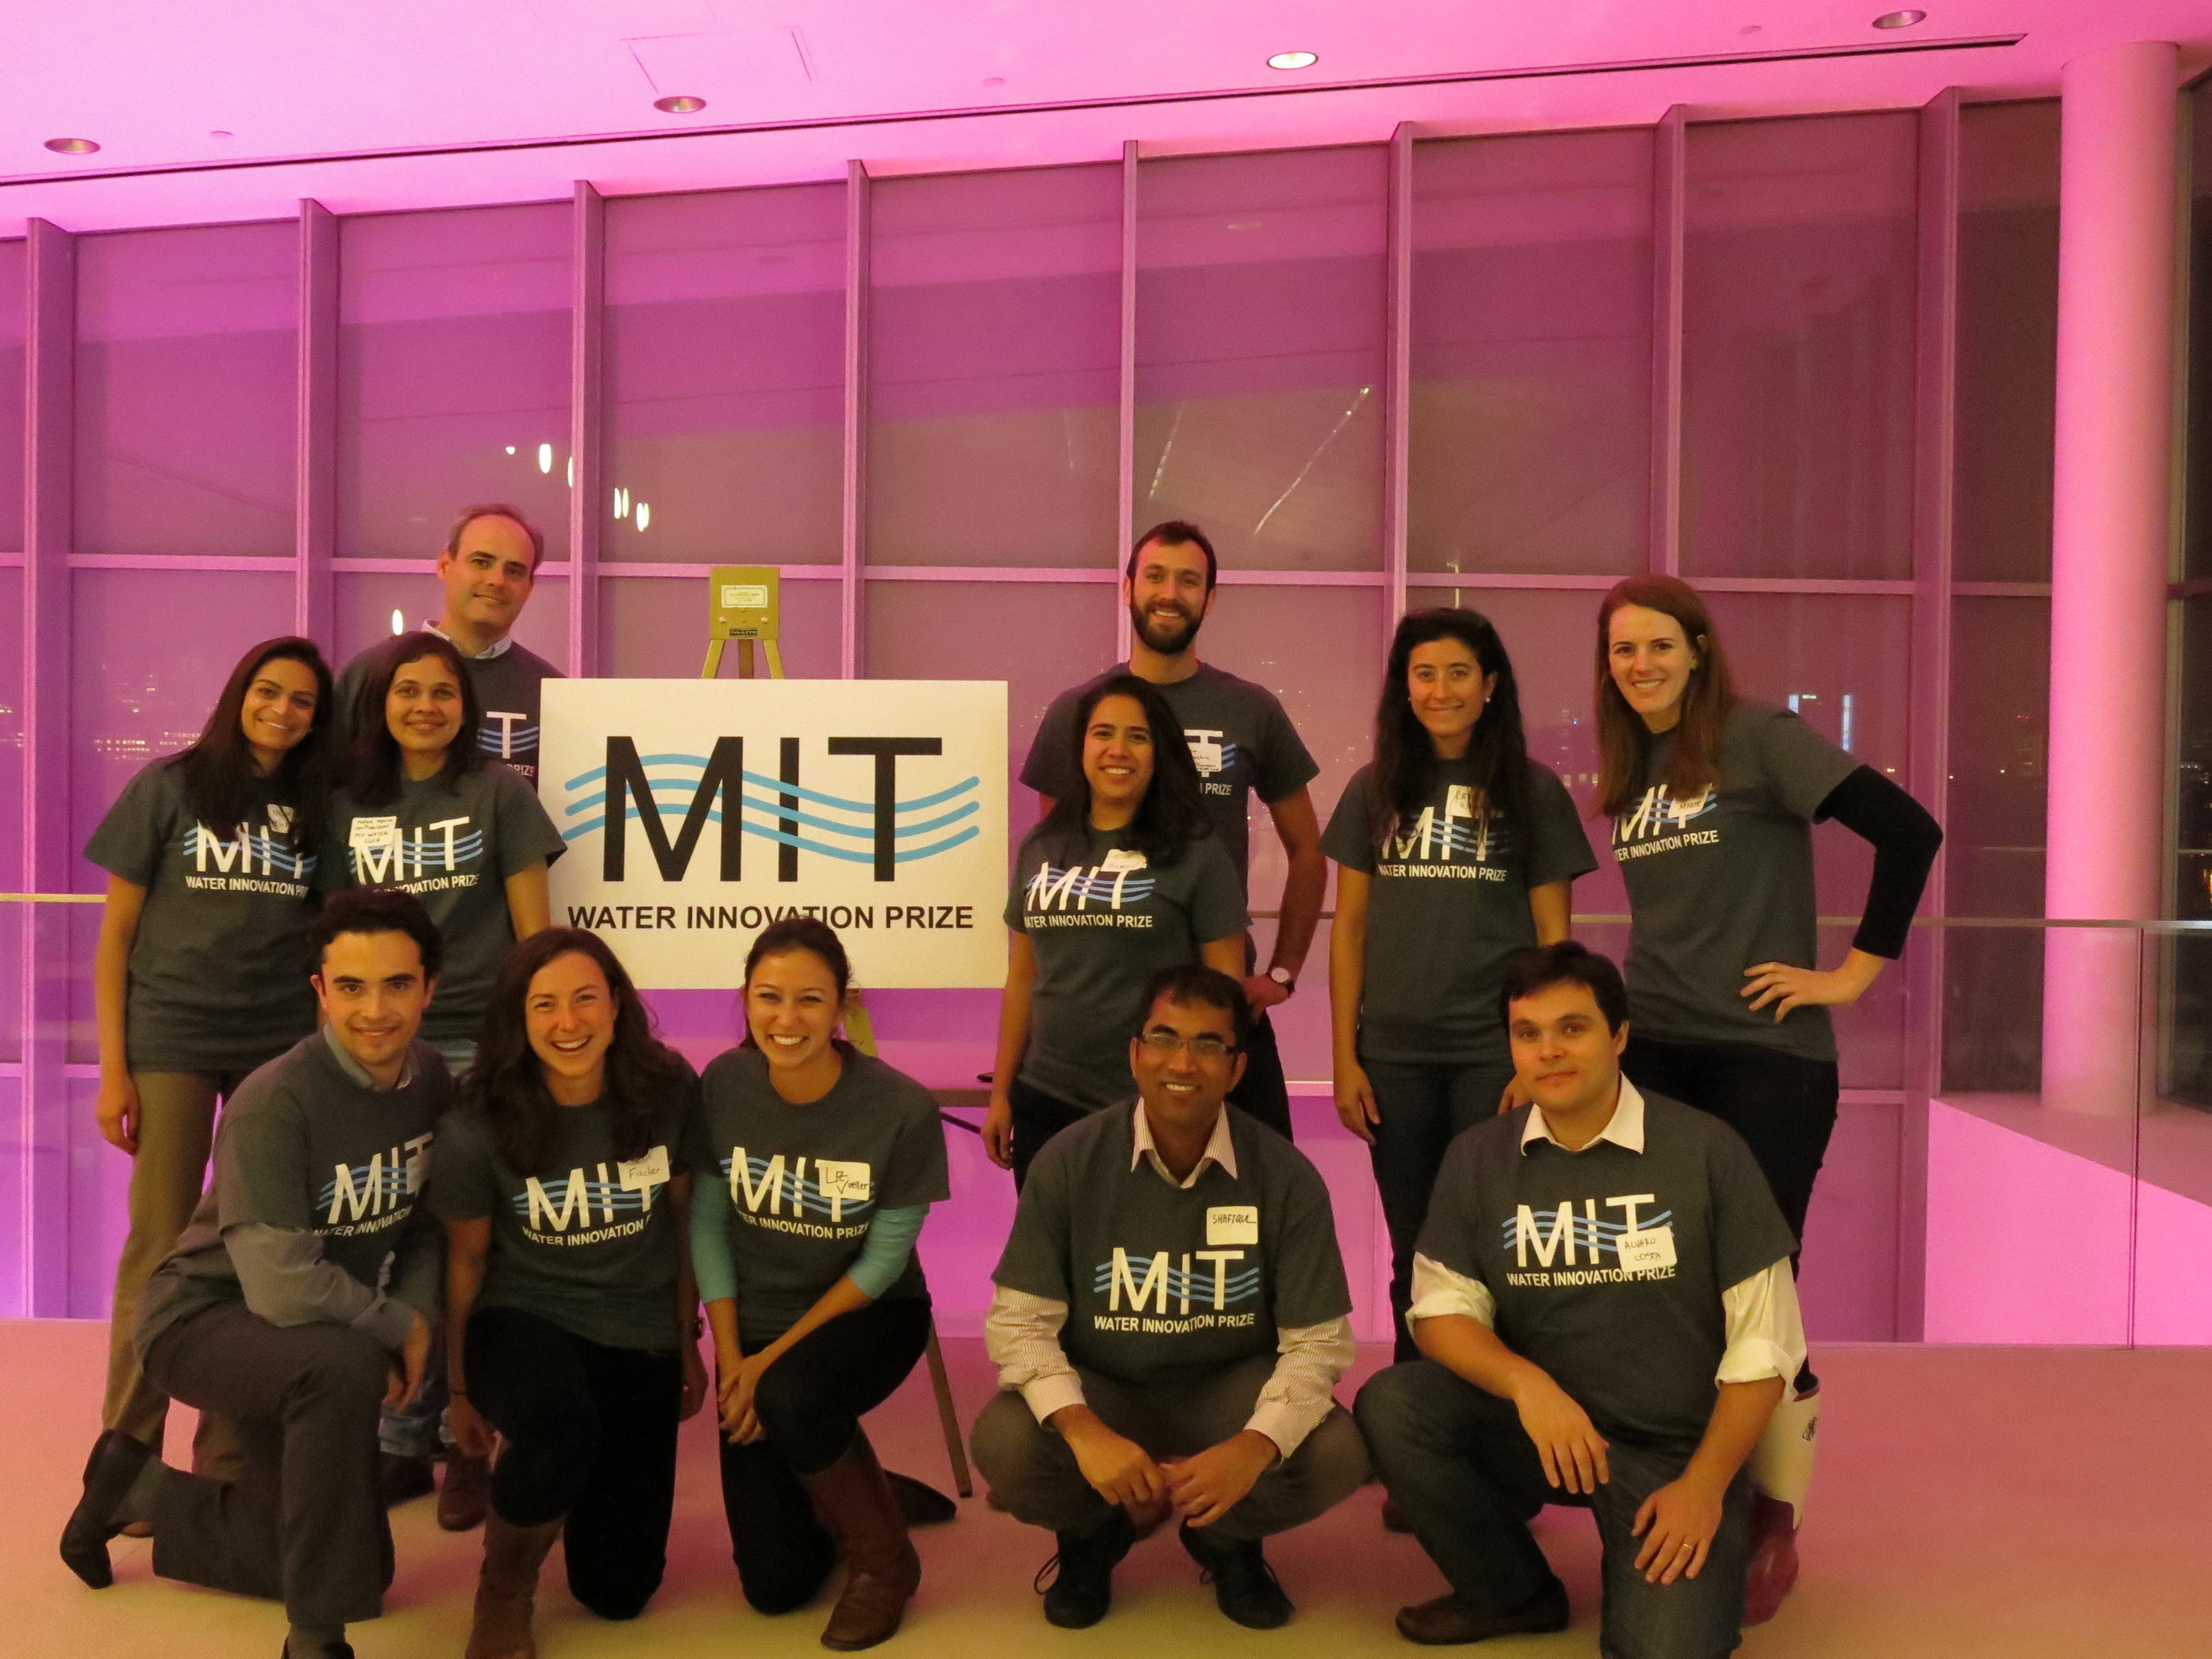  MIT Water Innovation Prize Team, 2015-2016 